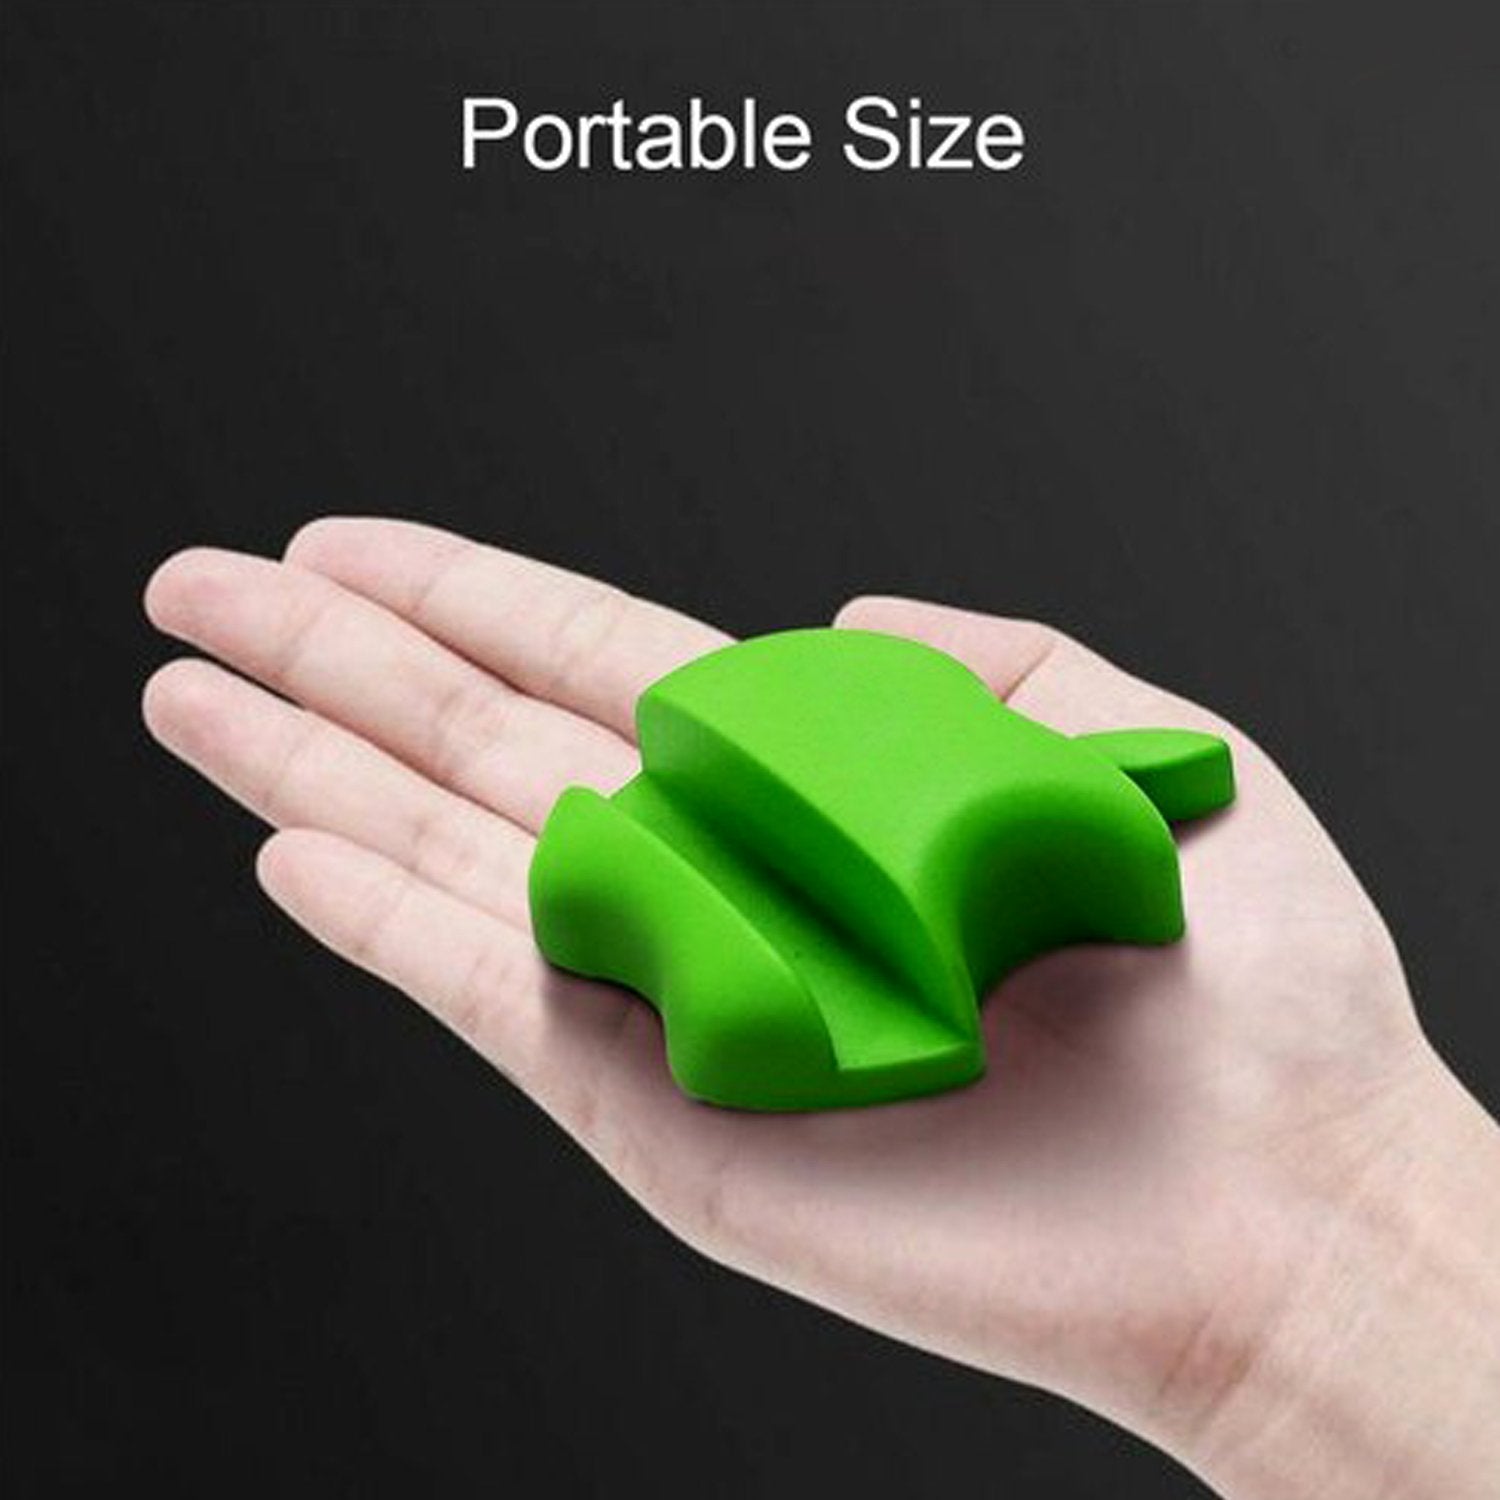 4700 Apple Shape Mobile Holder Multi Angle Adjustable Fold